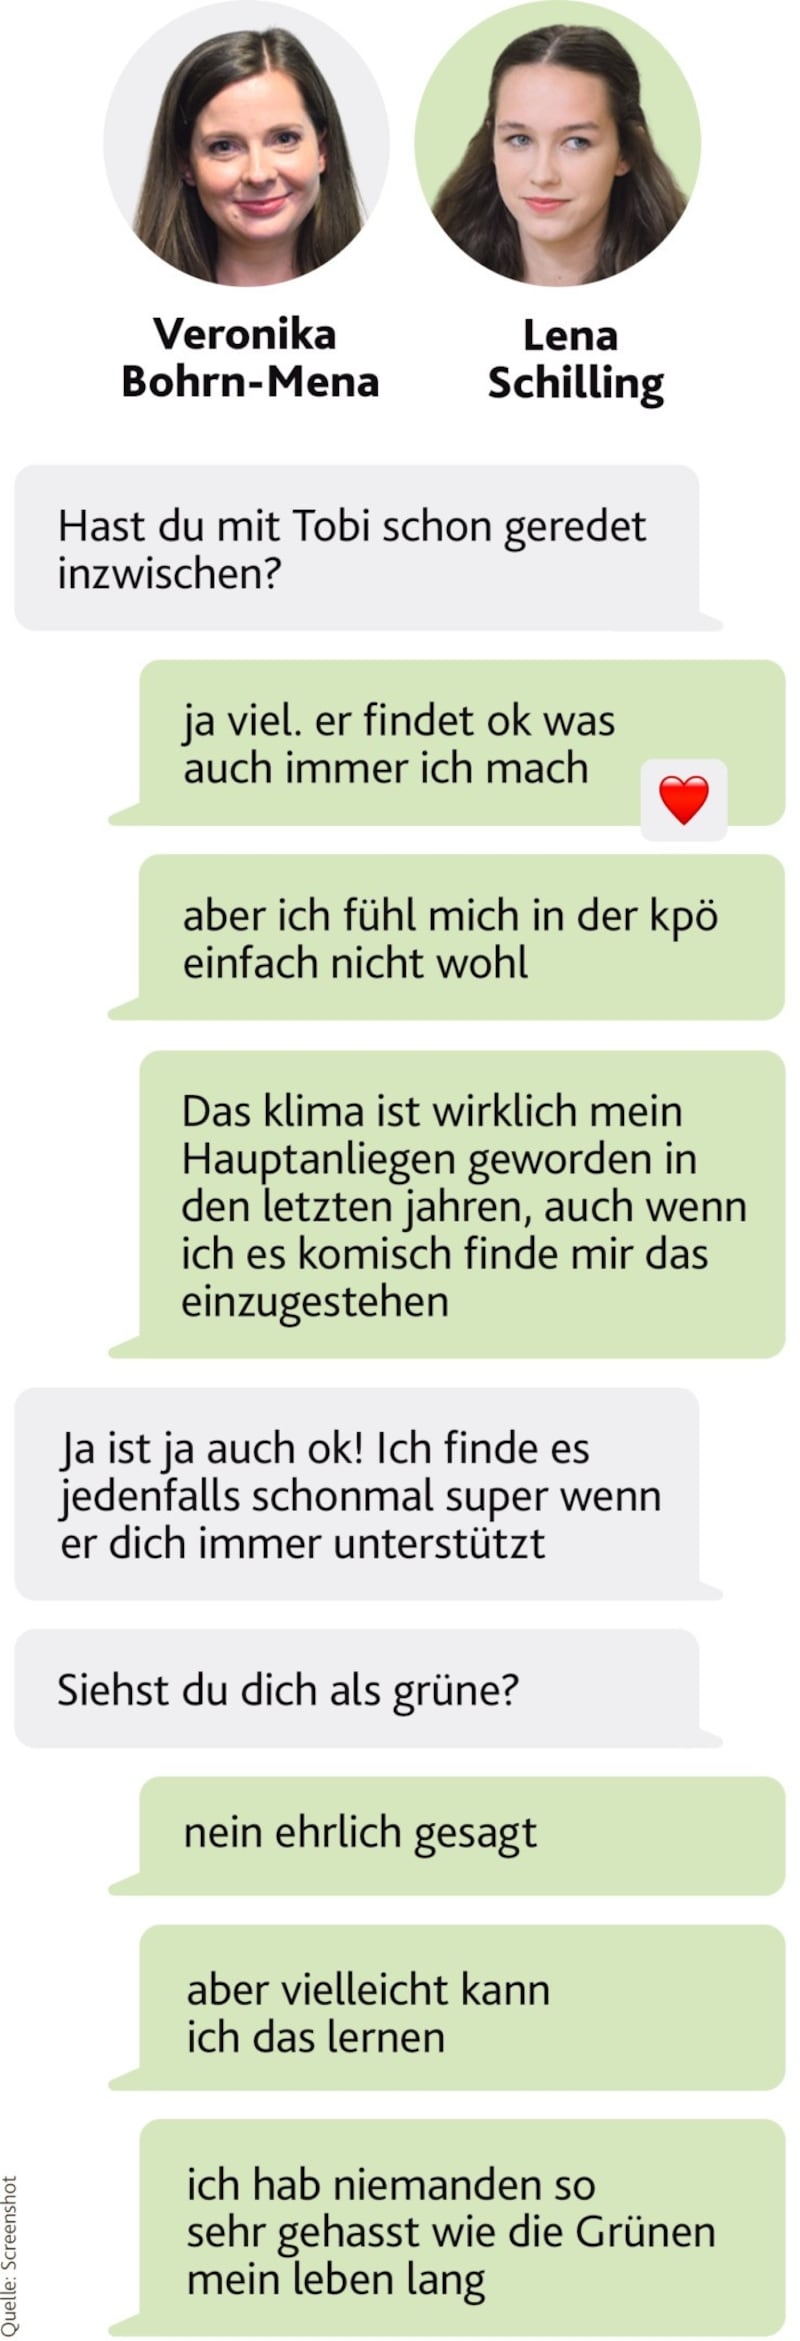 Messages between Schilling and her former friend Veronika Bohrn-Mena. (Bild: Krone KREATIV/SEPA.Media, GPA-djp)